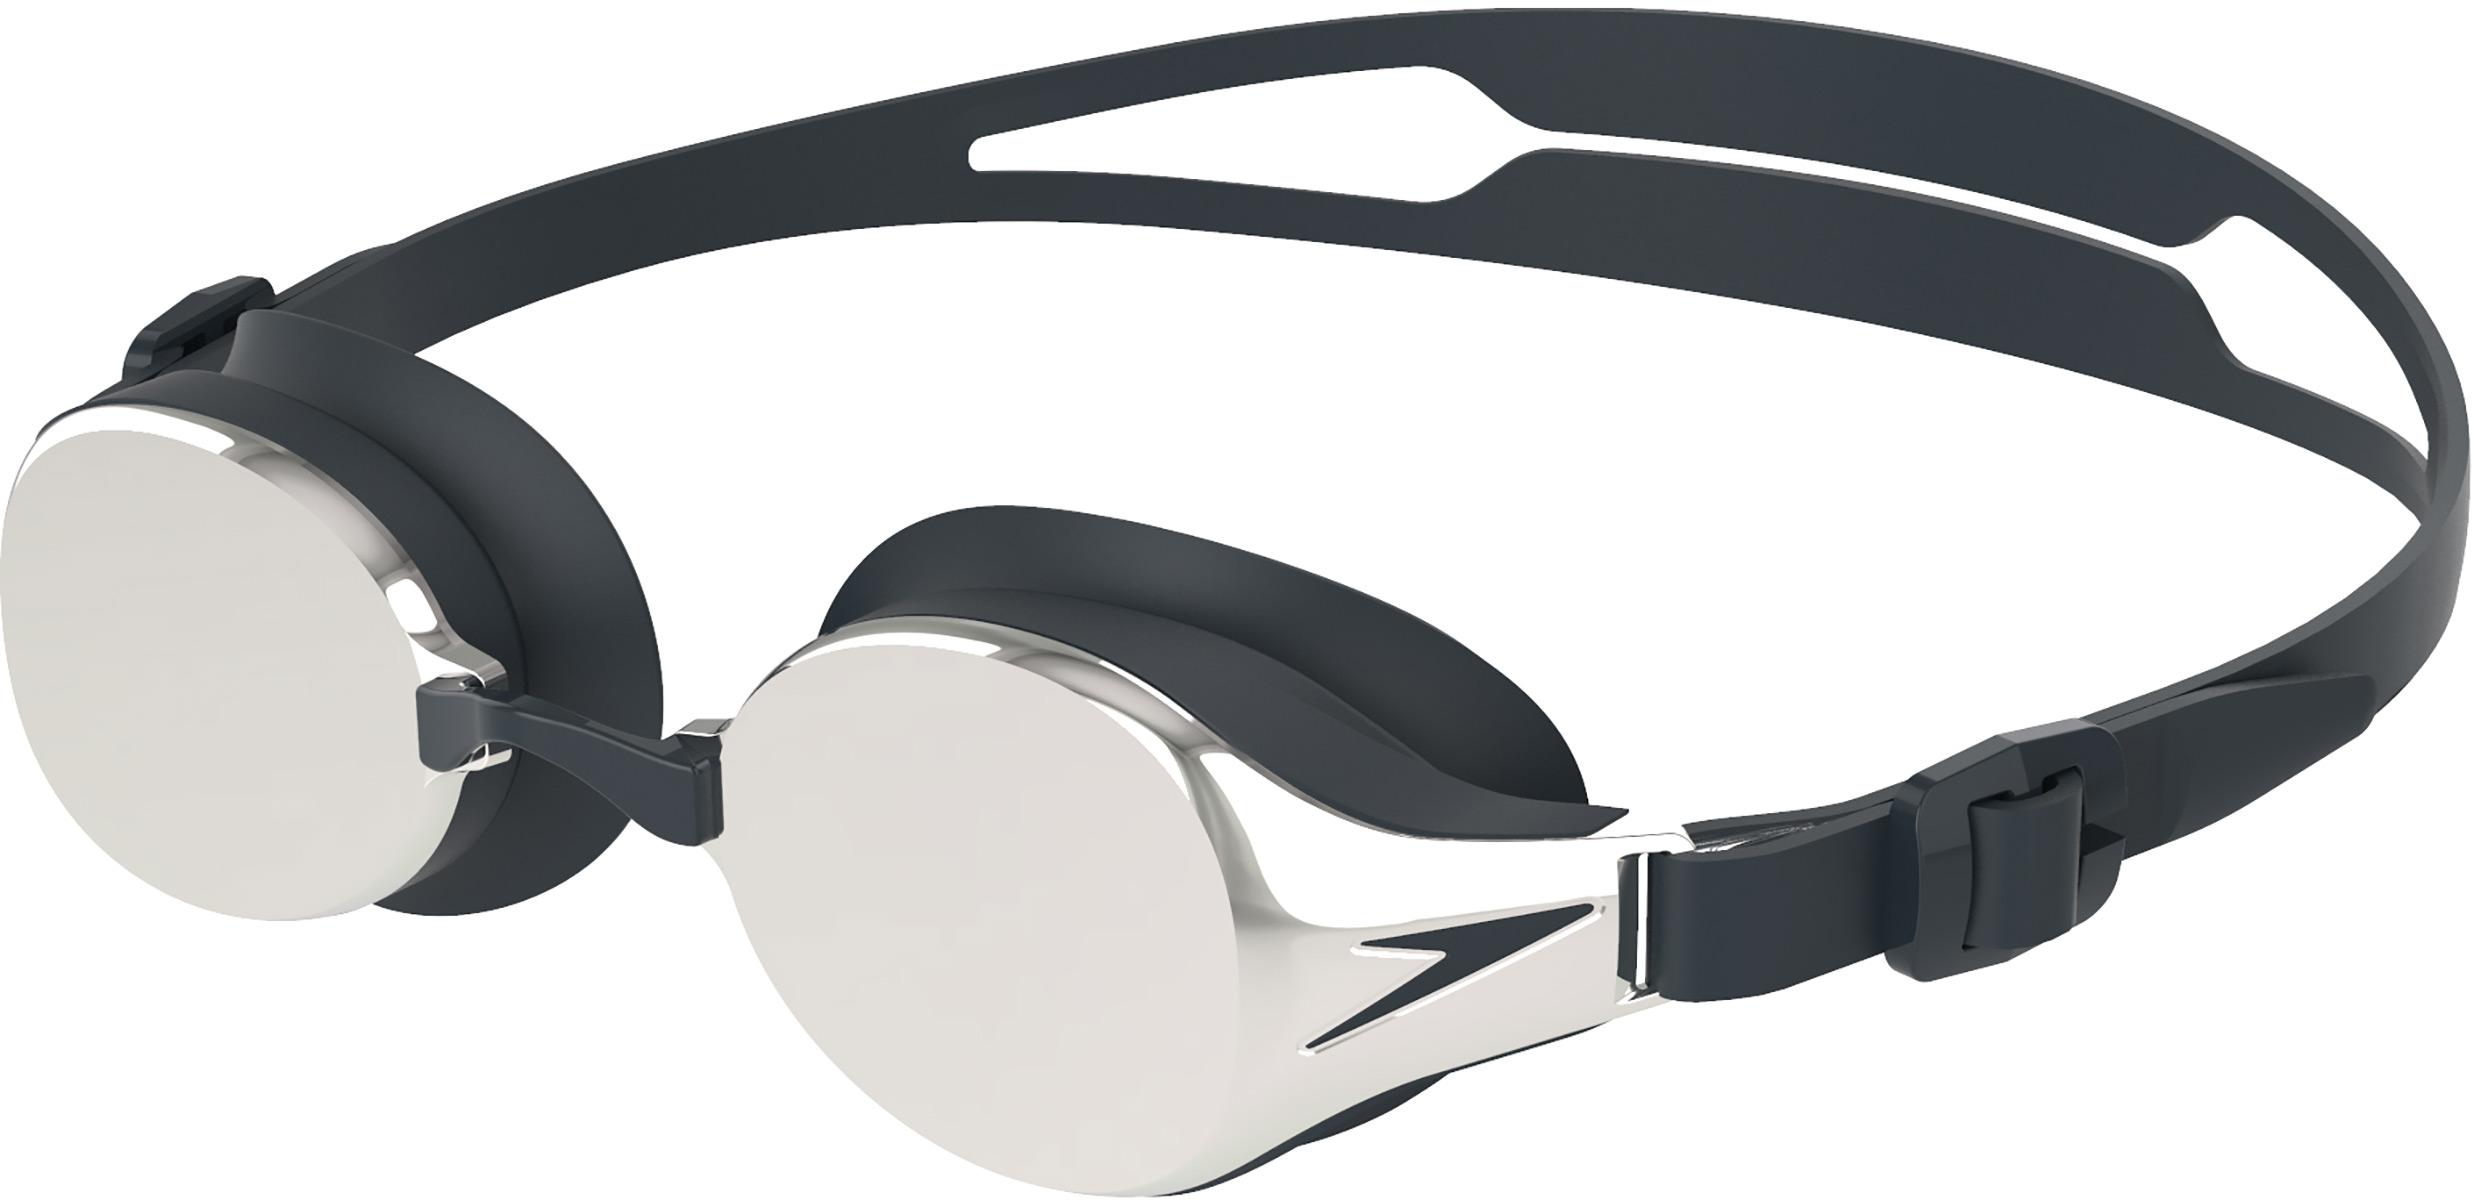 Speedo Hydropure Mirror Goggles - Black/chrome